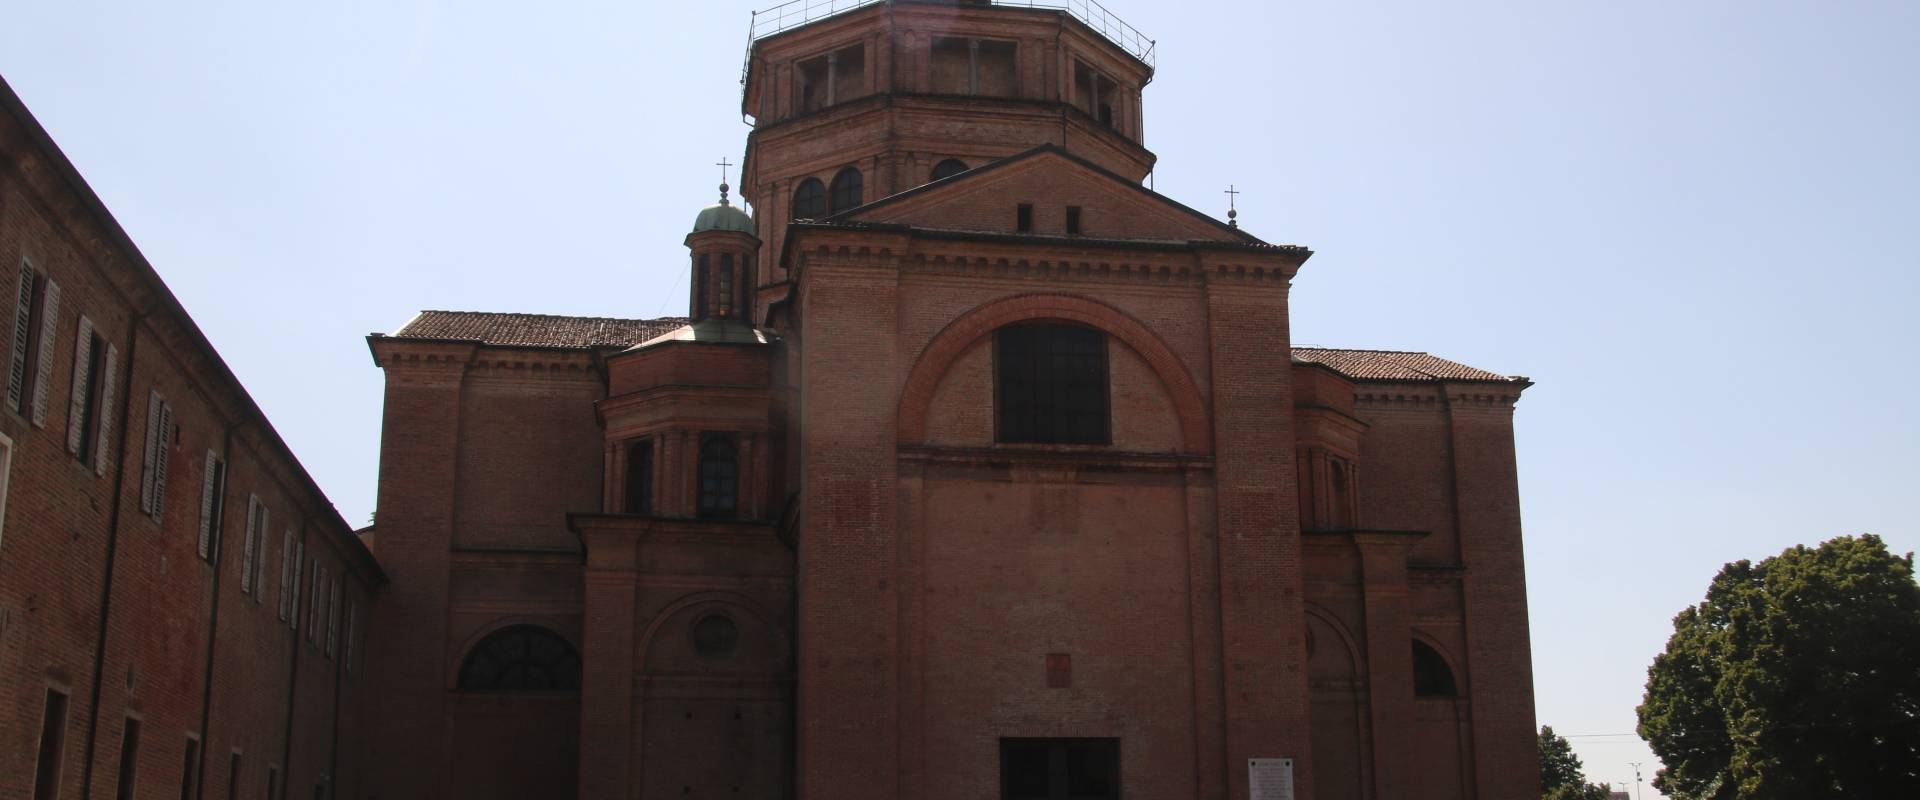 Basilica di Santa Maria di Campagna (Piacenza) 01 foto di Mongolo1984